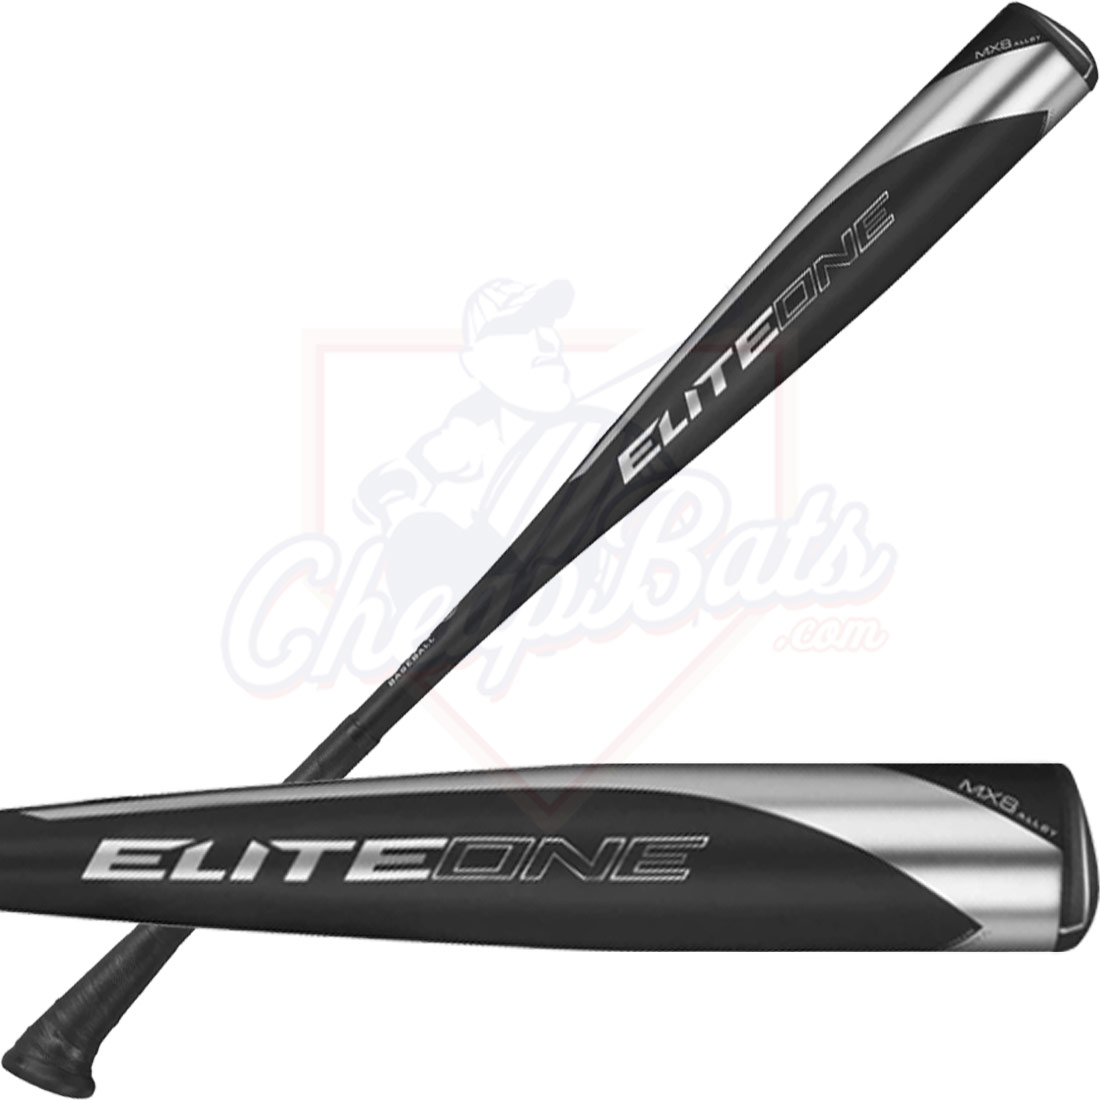 2020 Axe Elite One Youth USA Baseball Bat -8oz L139H